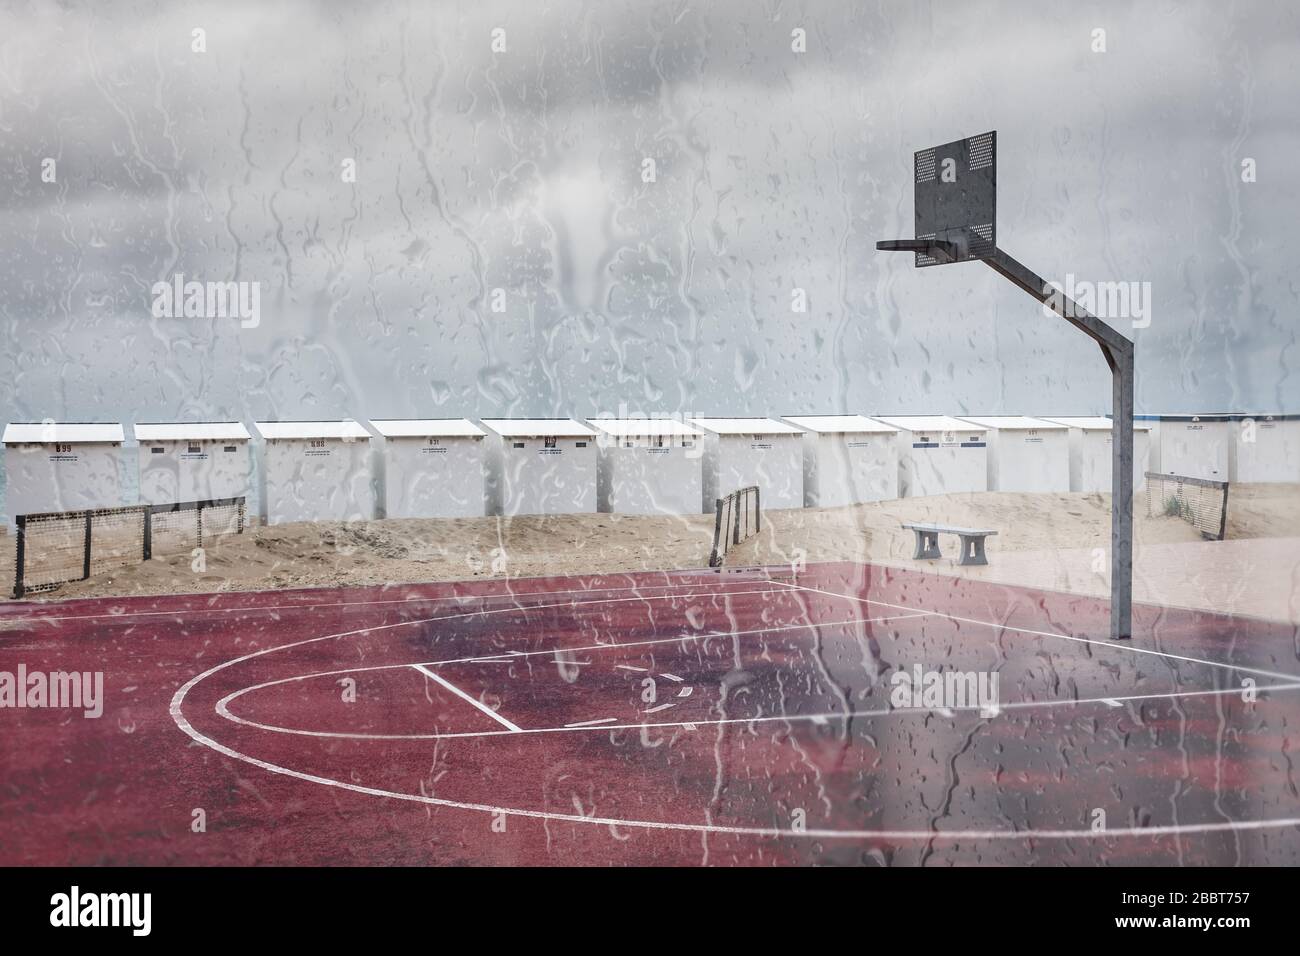 Beach basketball pitch seen through rainy window. of cafe Stock Photo